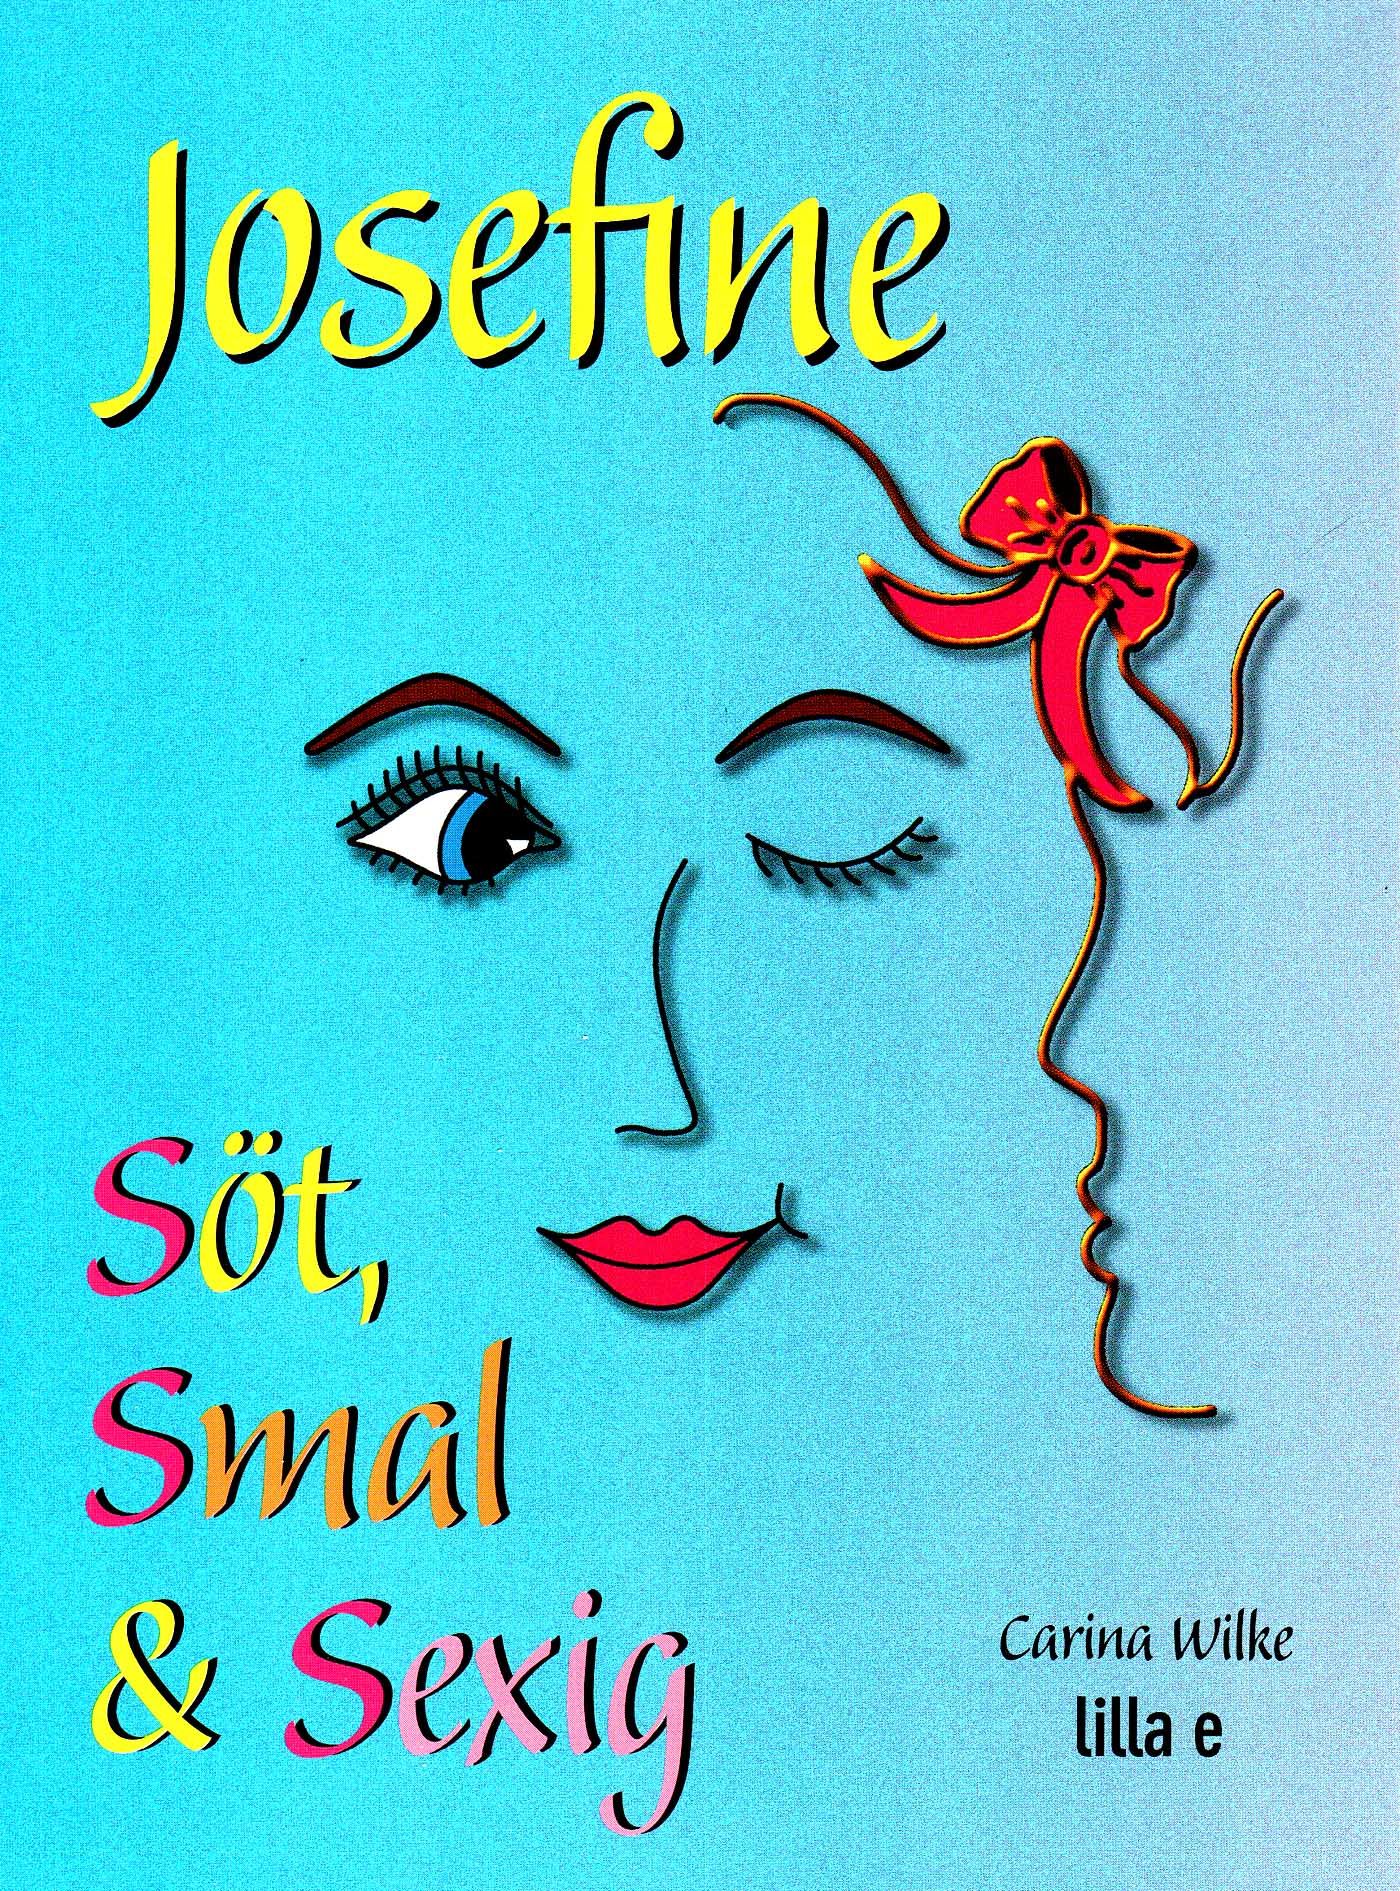 Josefine söt, smal & sexig, audiobook by Carina Wilke